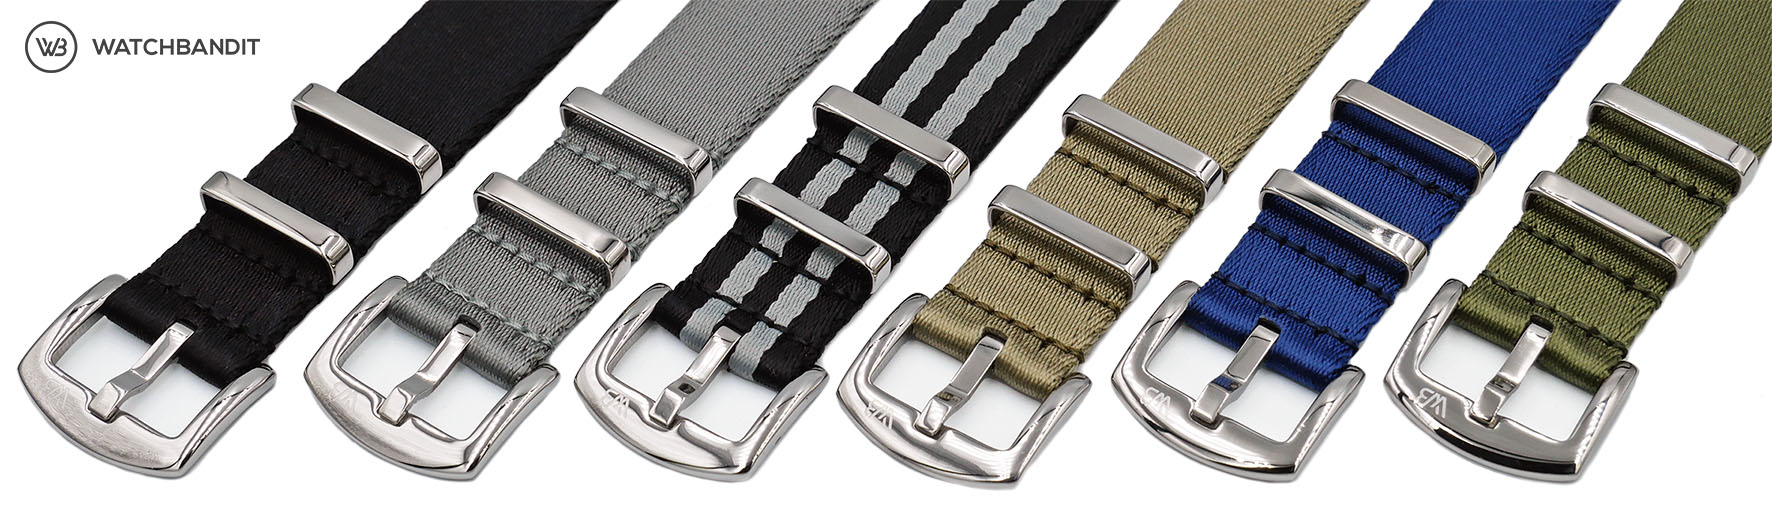 Premium 1.2 mm seat belt polished NATO Strap collection by WatchBandit Banner